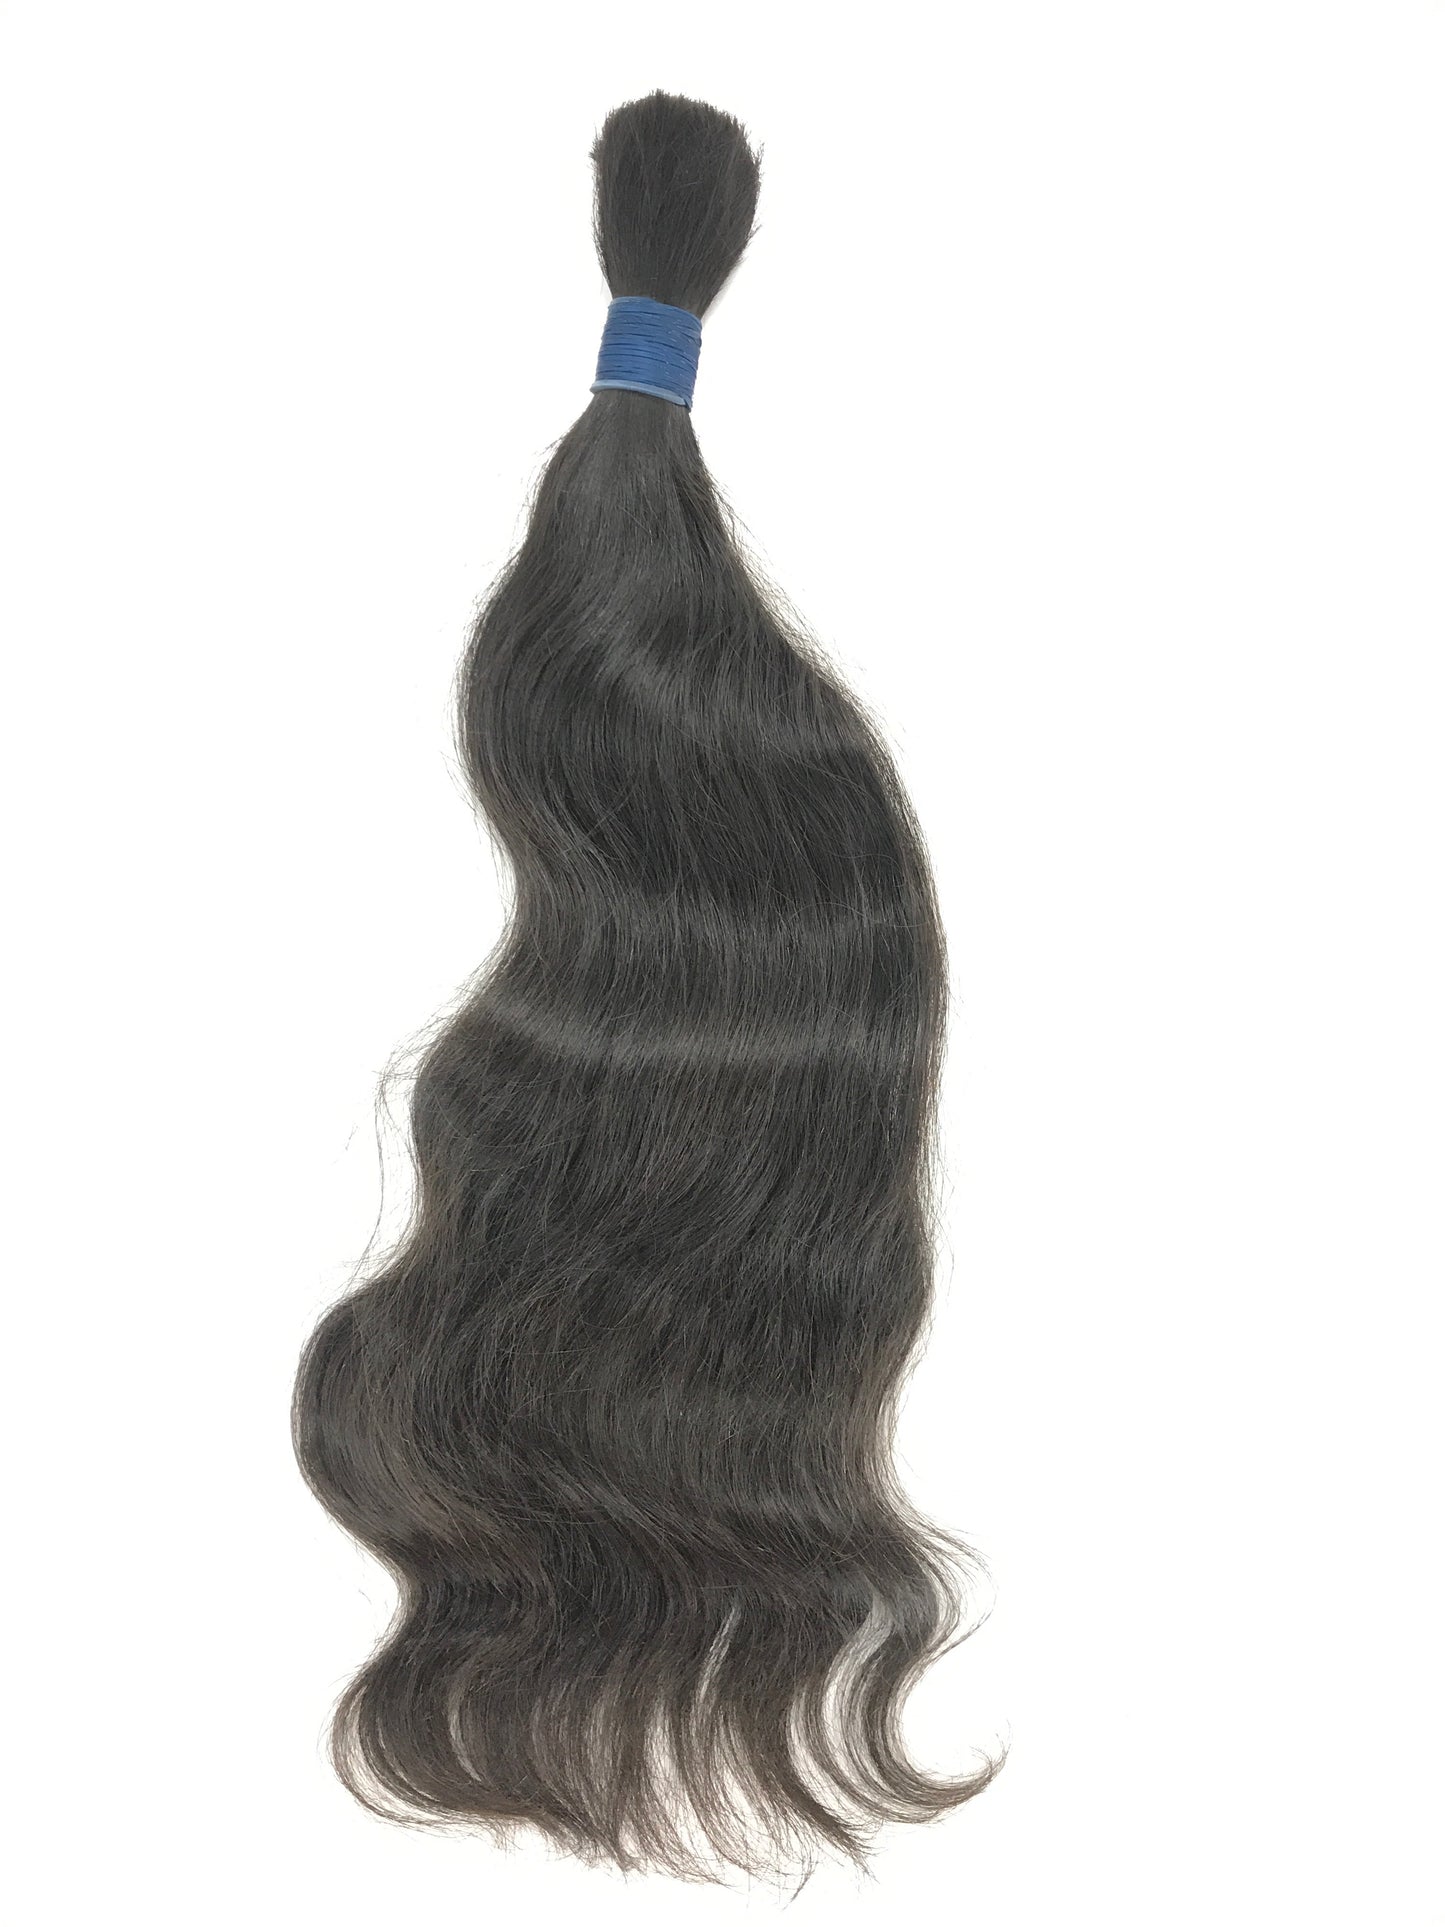 Indian Virgin Remy Human Hair, Bulk, Wavy, 18'', Virgin, Quick Shipping!-Virgin Hair & Beauty, The Best Hair Extensions, Real Virgin Human Hair.